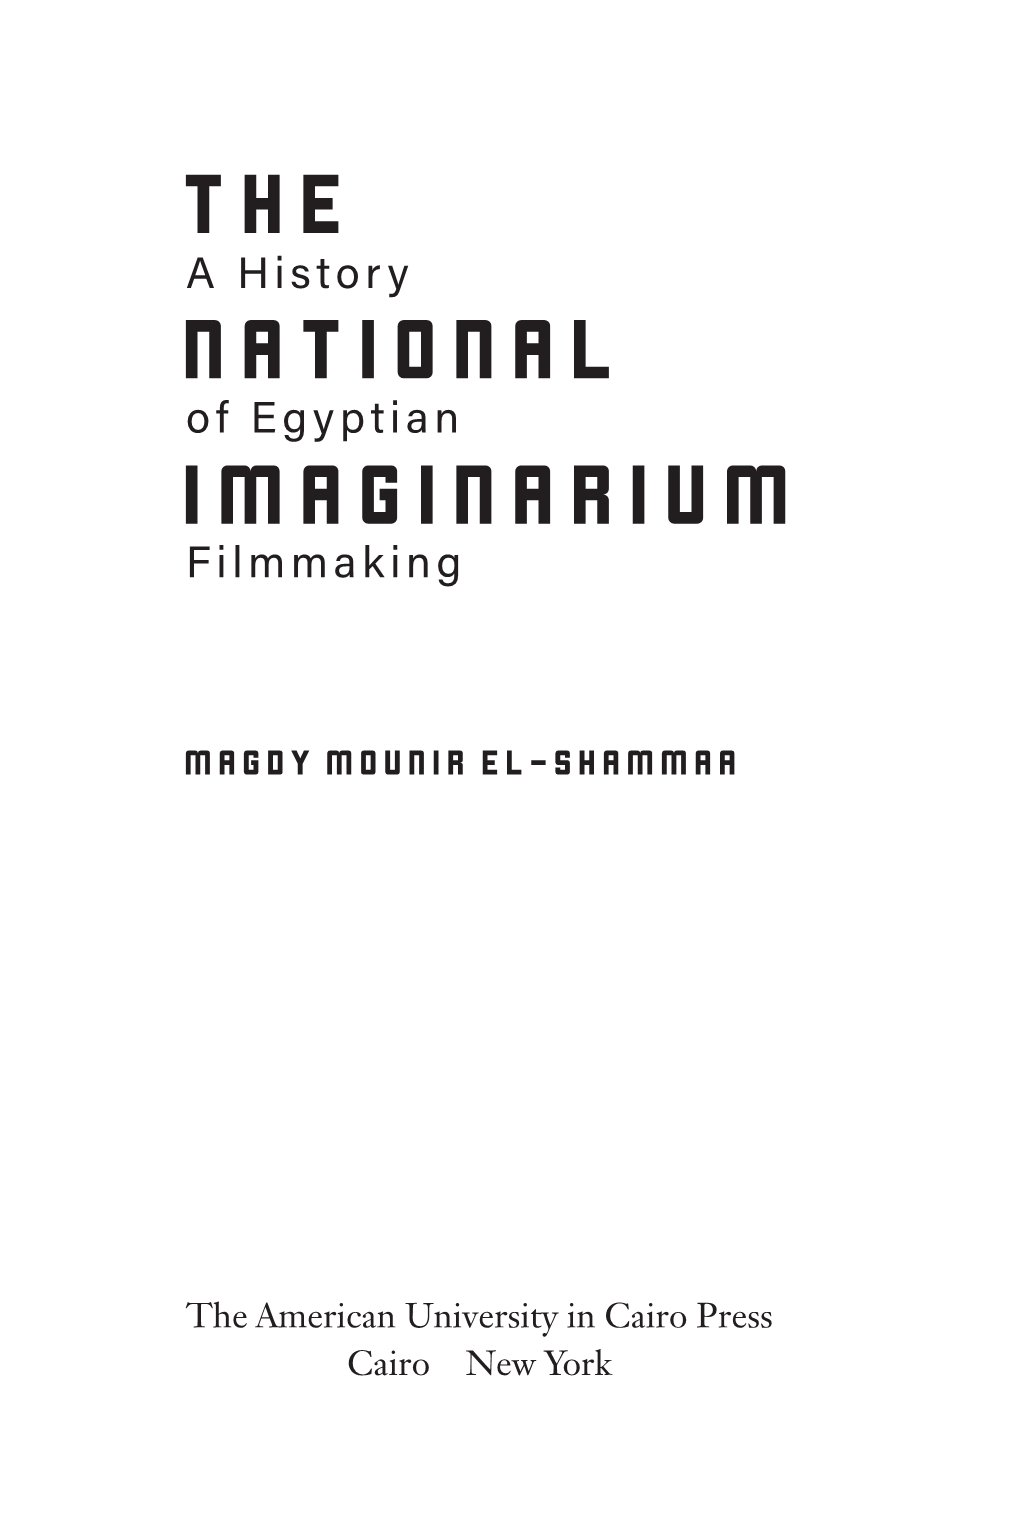 The National Imaginarium-PART1 DH 11-05-2021.Indd 3 11/05/2021 9:04 AM Contents